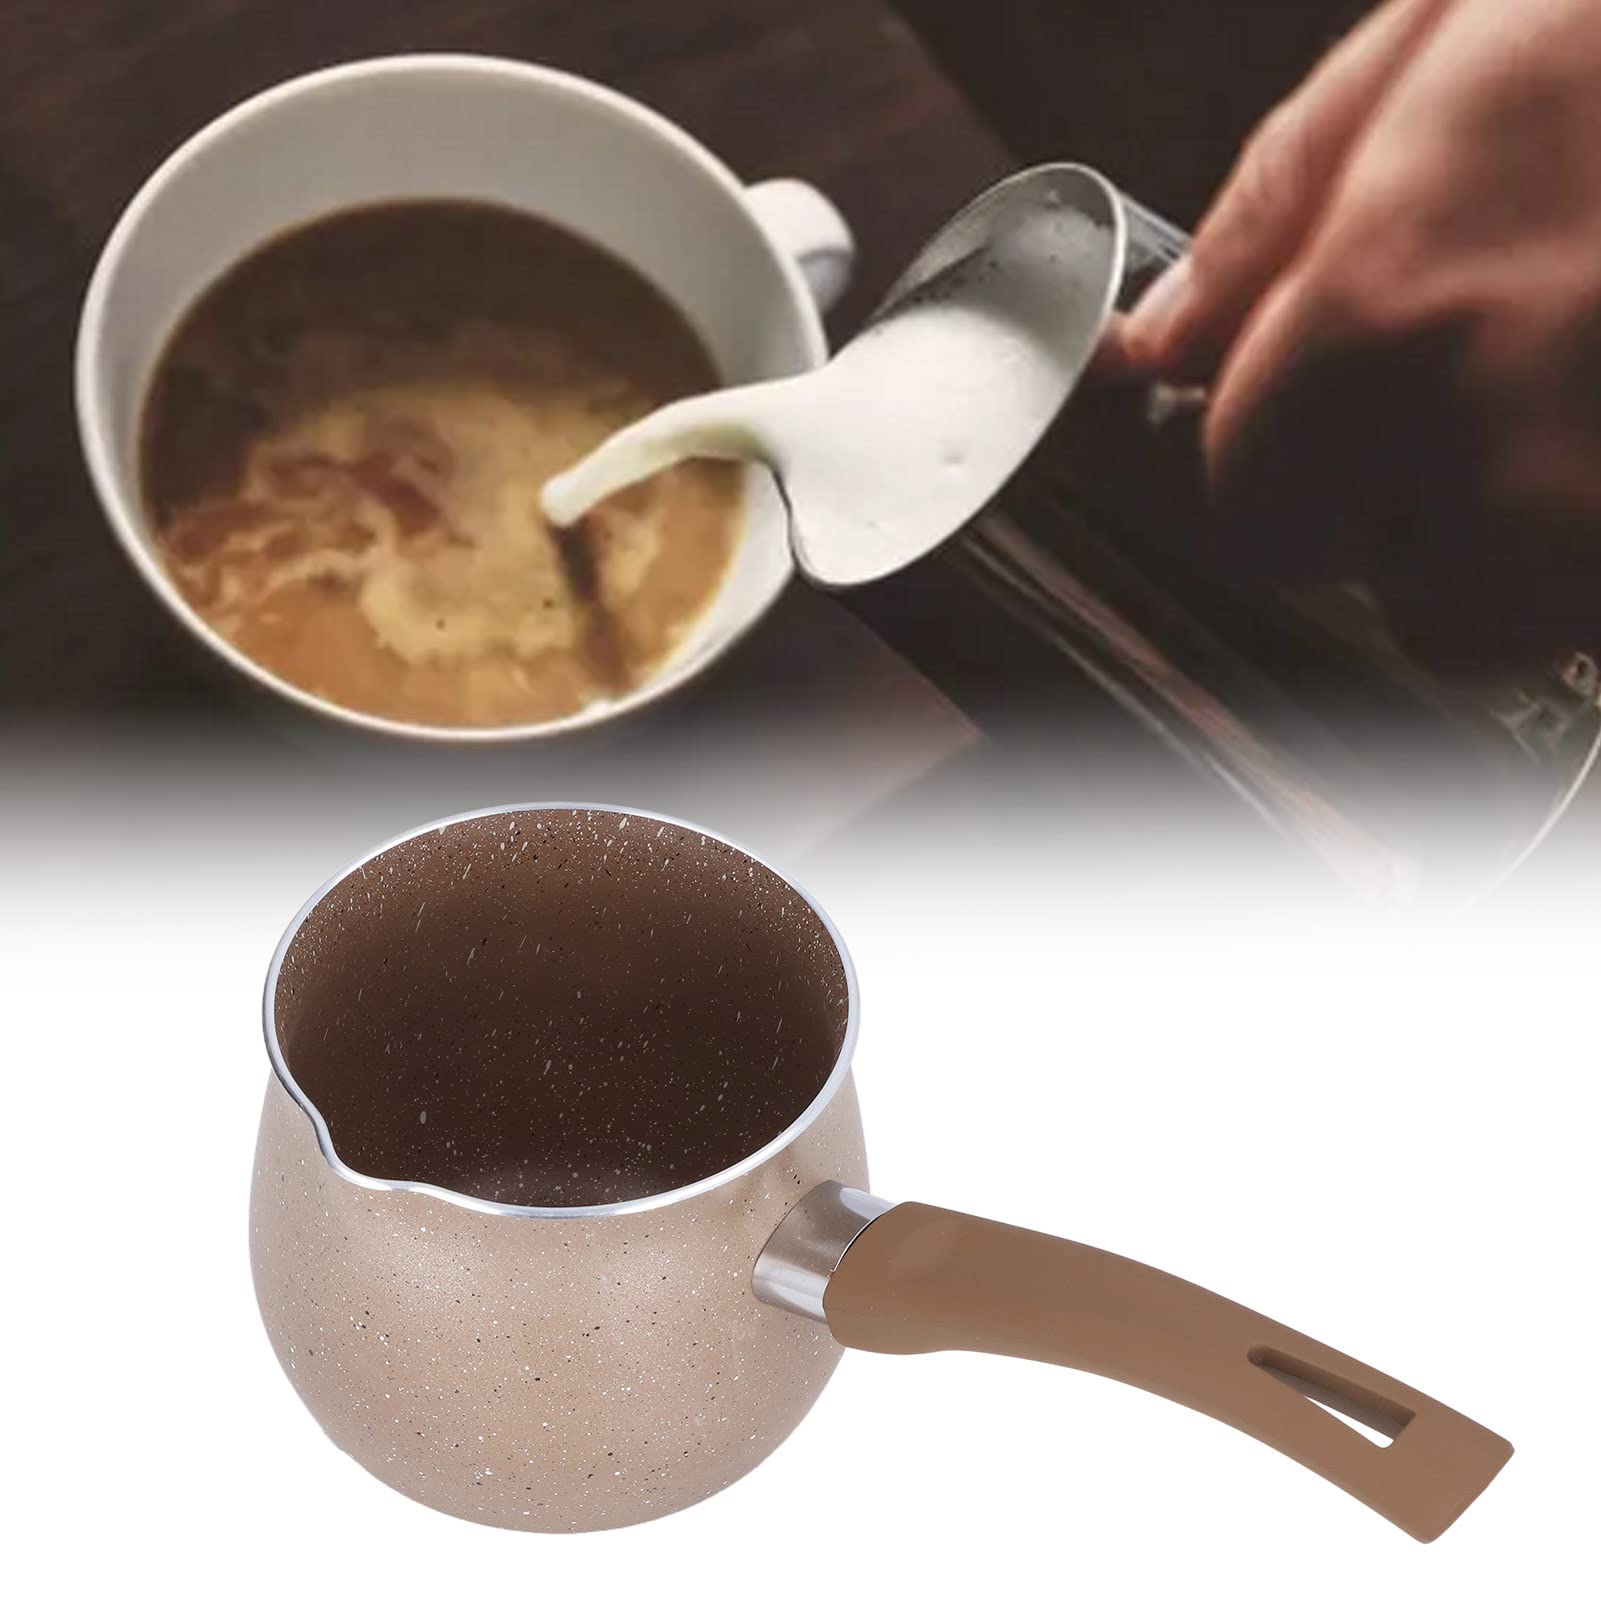 Mini Milk Pan, Aluminum Alloy Anti Scalding Diameter Warmer Coffee Pot Portable Non Stick for Cooking Heating Boiling Melting (Brown)